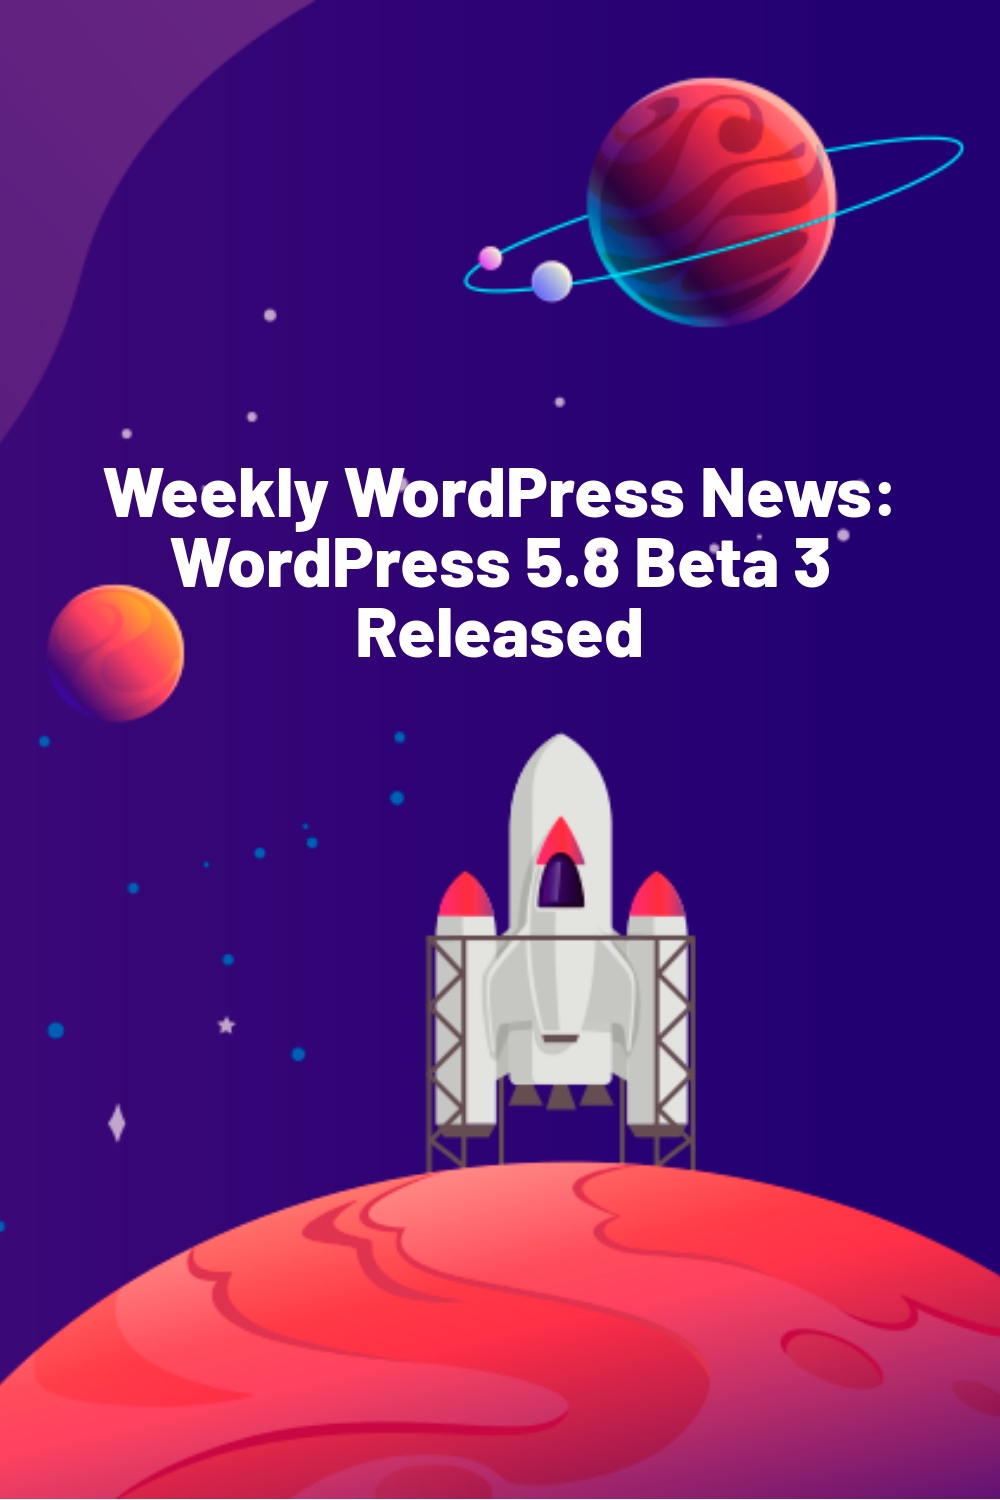 Weekly WordPress News: WordPress 5.8 Beta 3 Released